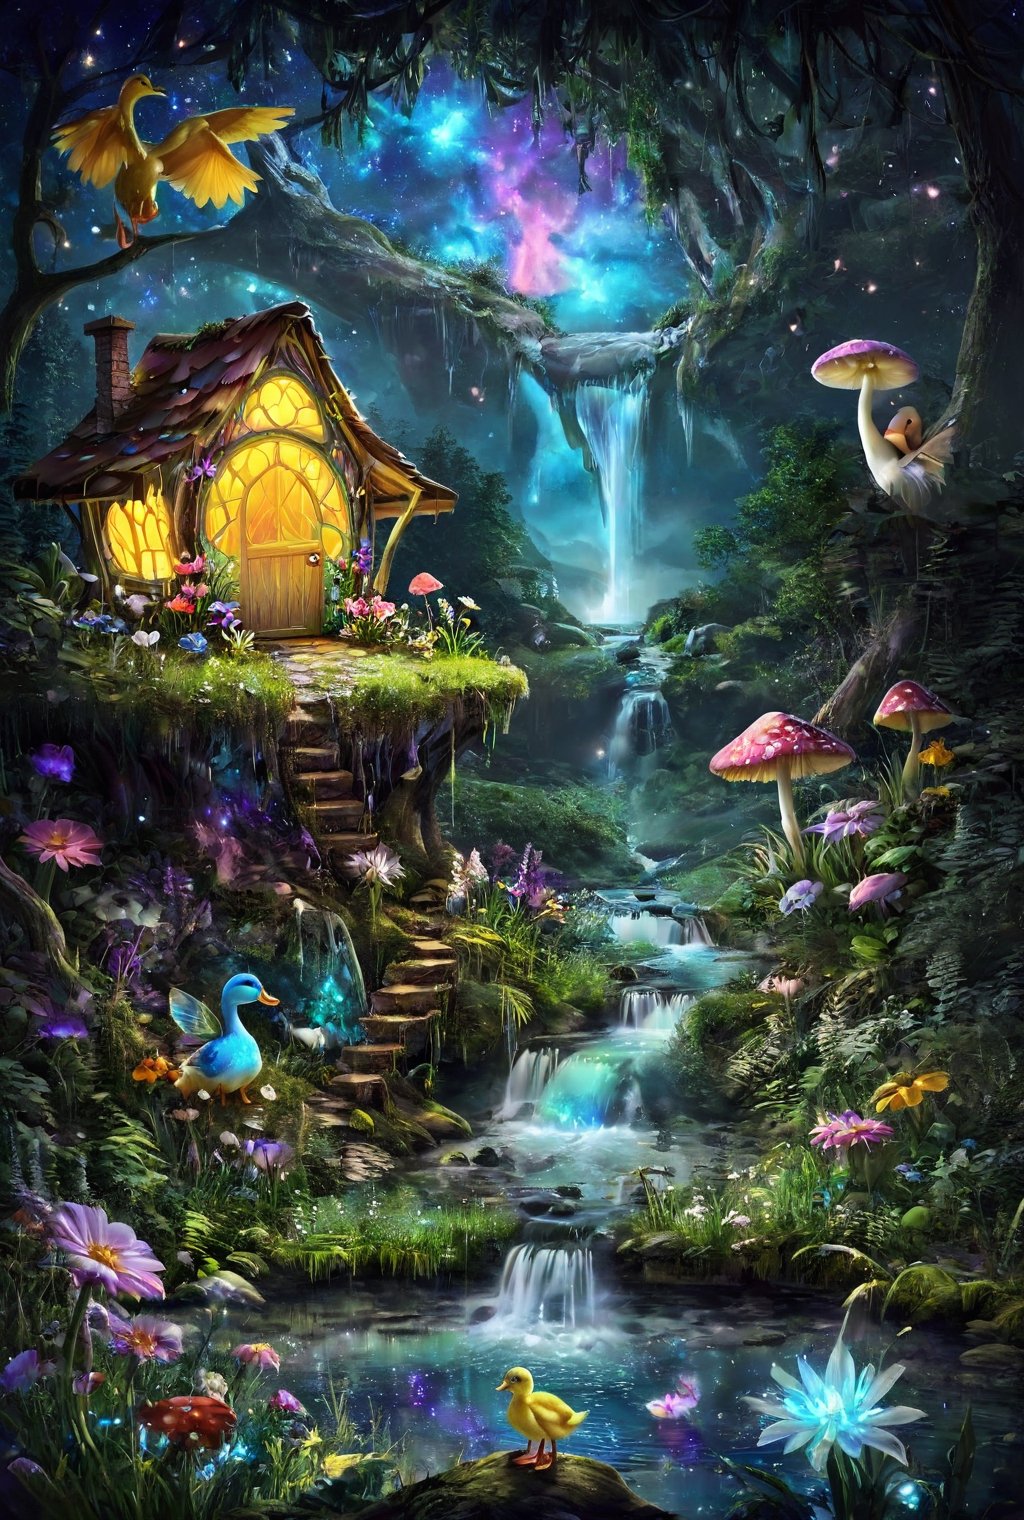 magic  fantacyworld ,beautiful fairy,,( plyaing wa_gon), in fantacy magic forest, glowing in night, flower,mashroom ,  fantacy waterfall, lake, duck ,mashroom , mini house, colour art,style,DissolveSdxl0,3l3ctronics